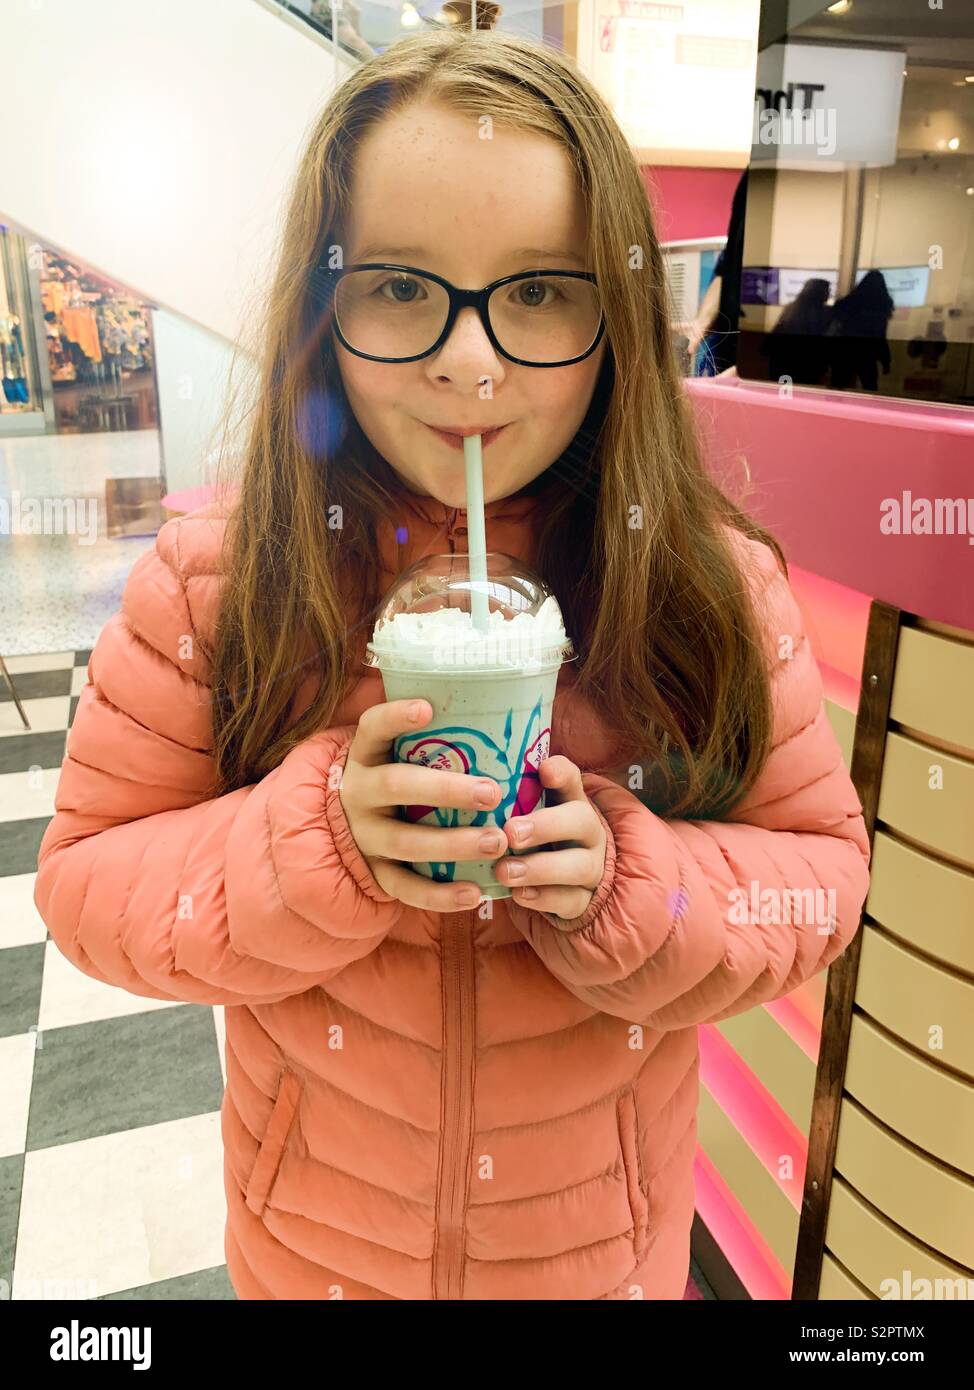 Young girl drinking milkshake Stock Photo